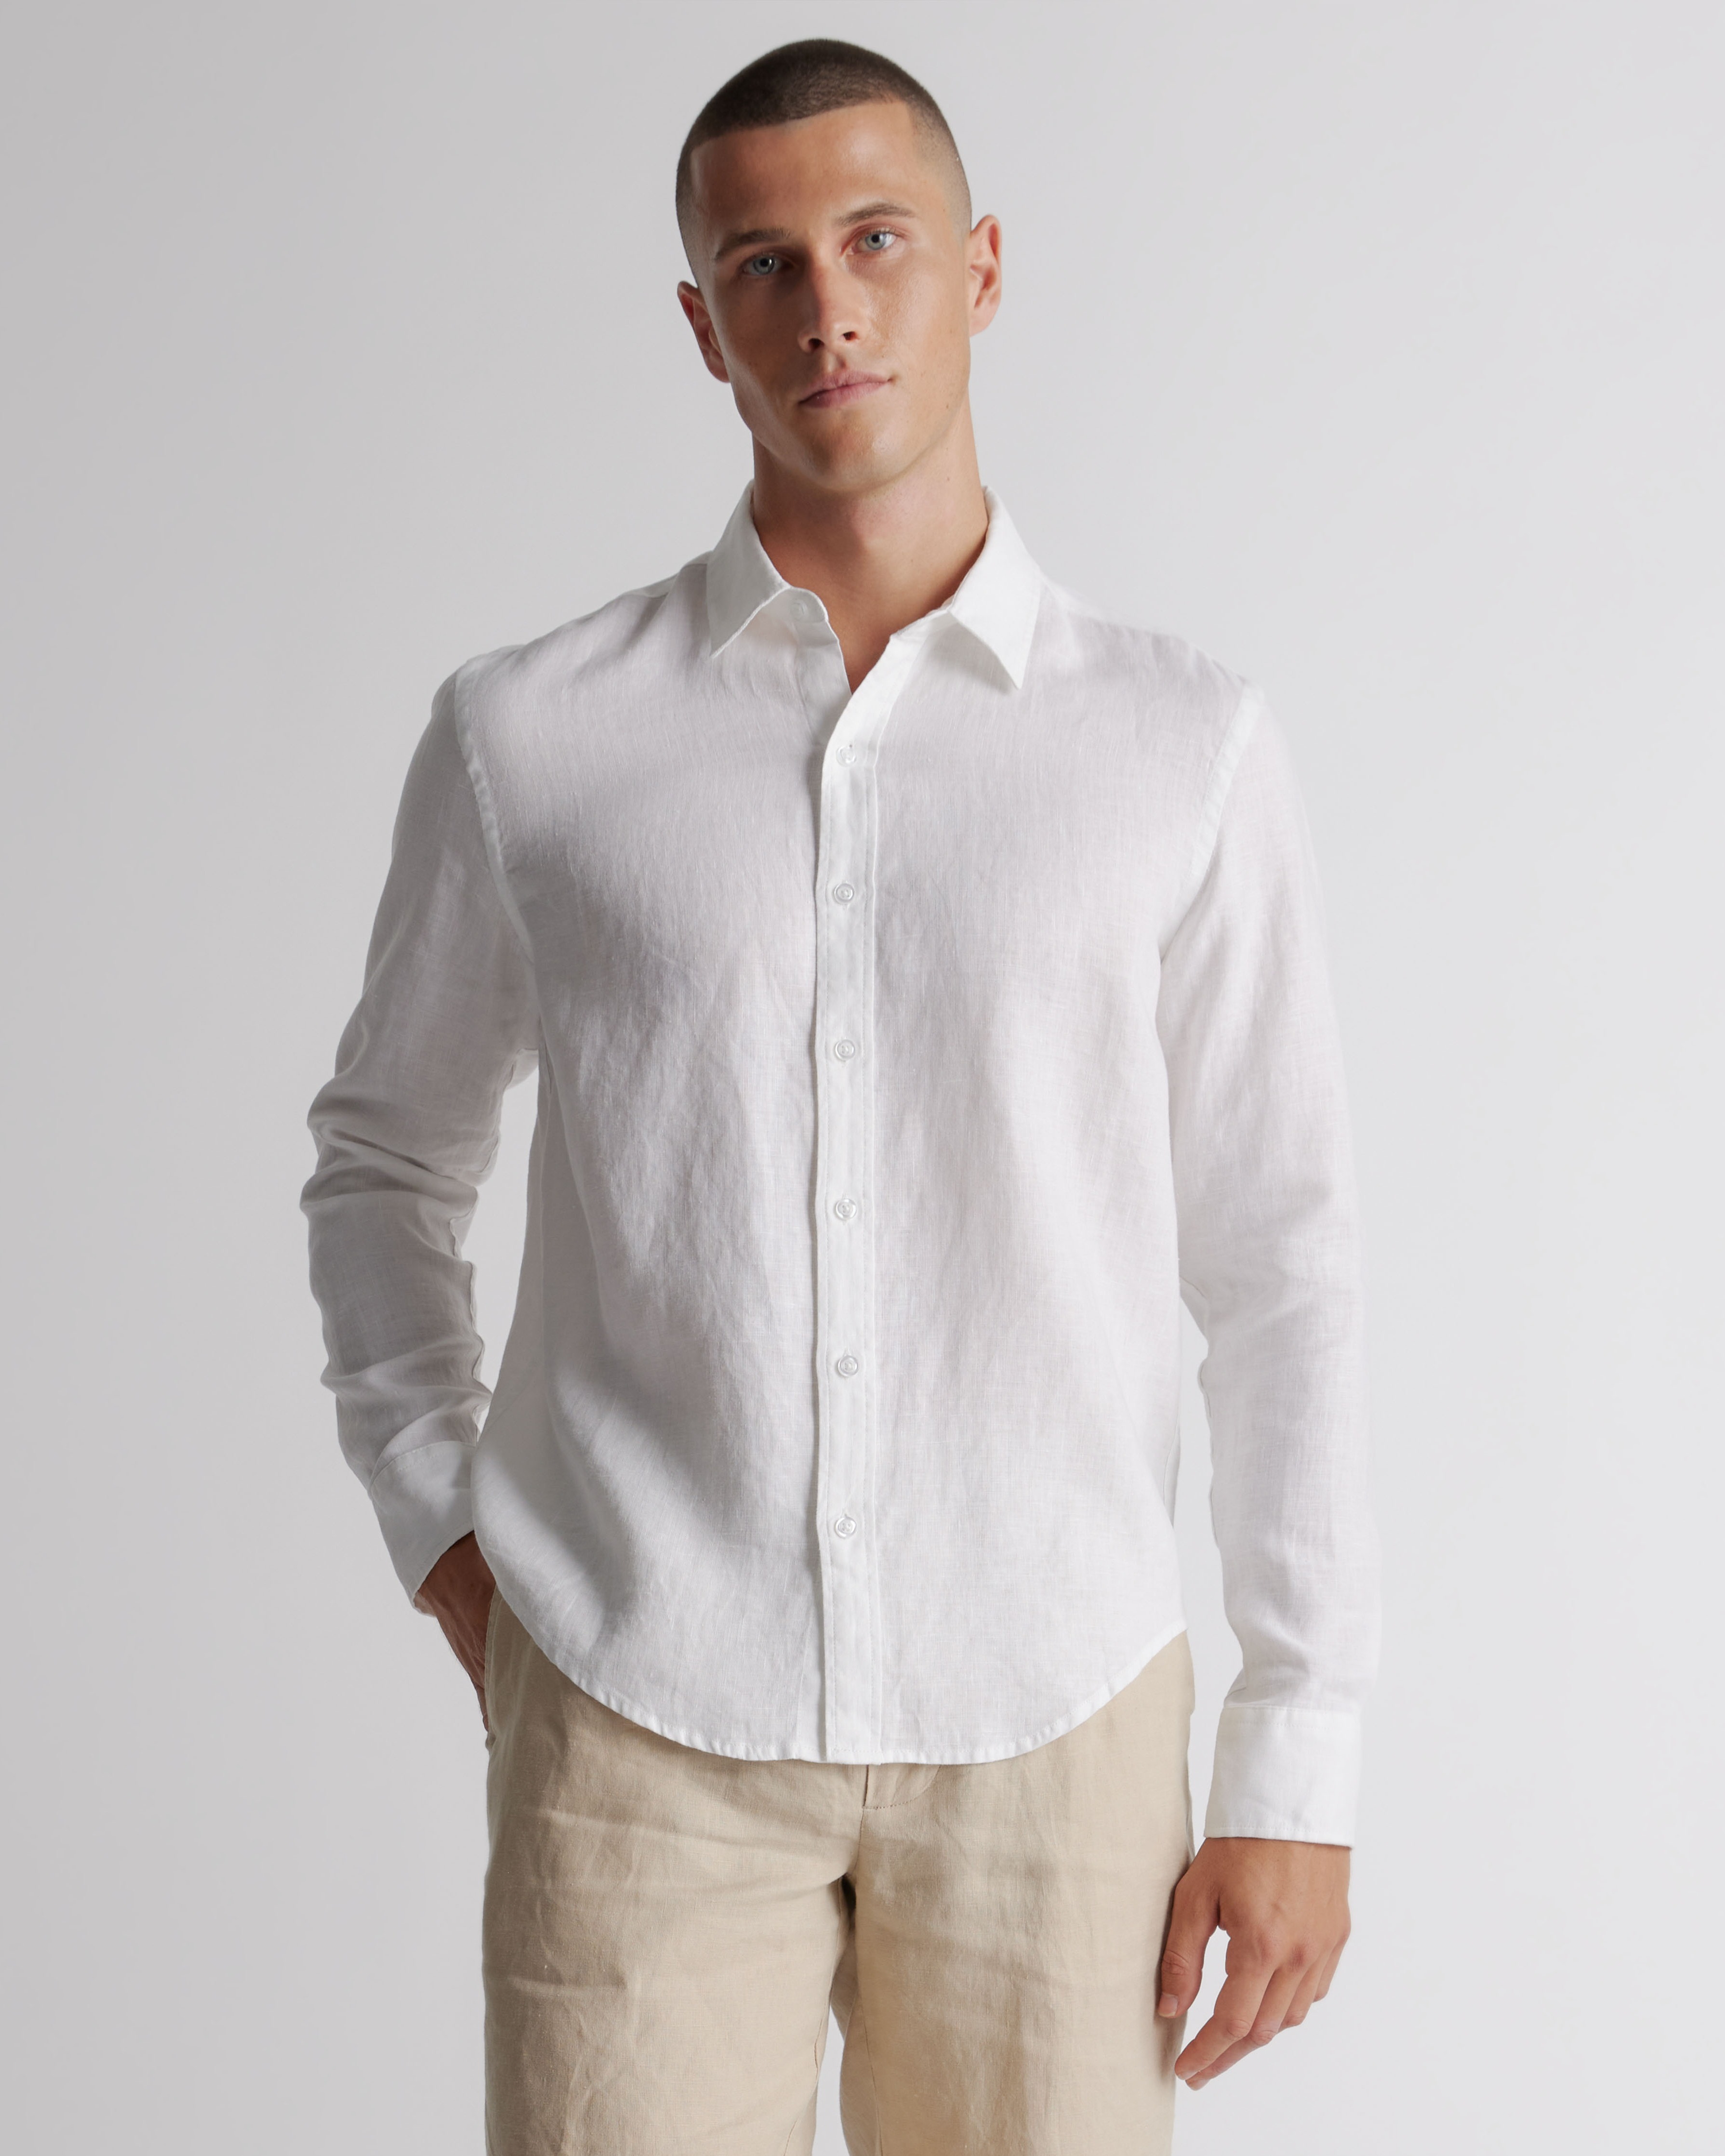 Quince Men's 100% European Linen Long Sleeve Shirt In White